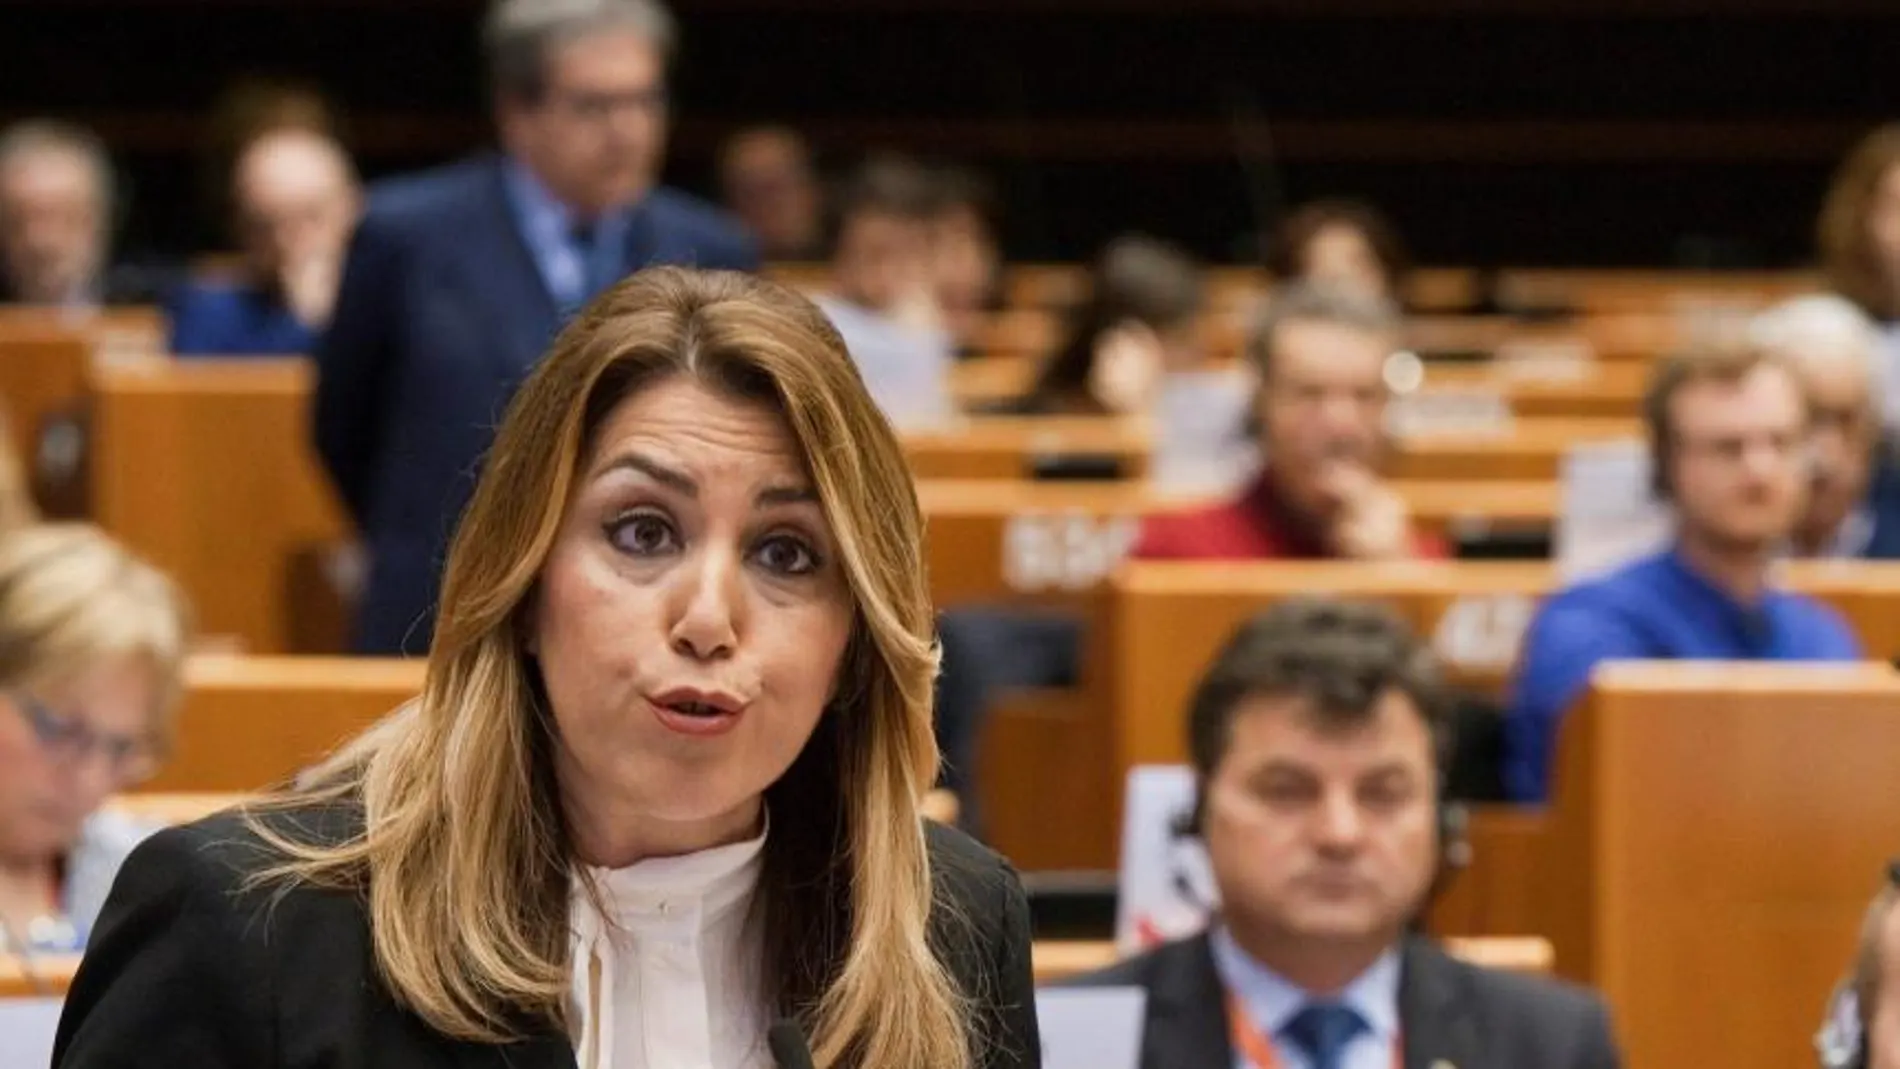 La presidenta Susana Díaz ha vuelto a trasladarse a Bruselas esta semana